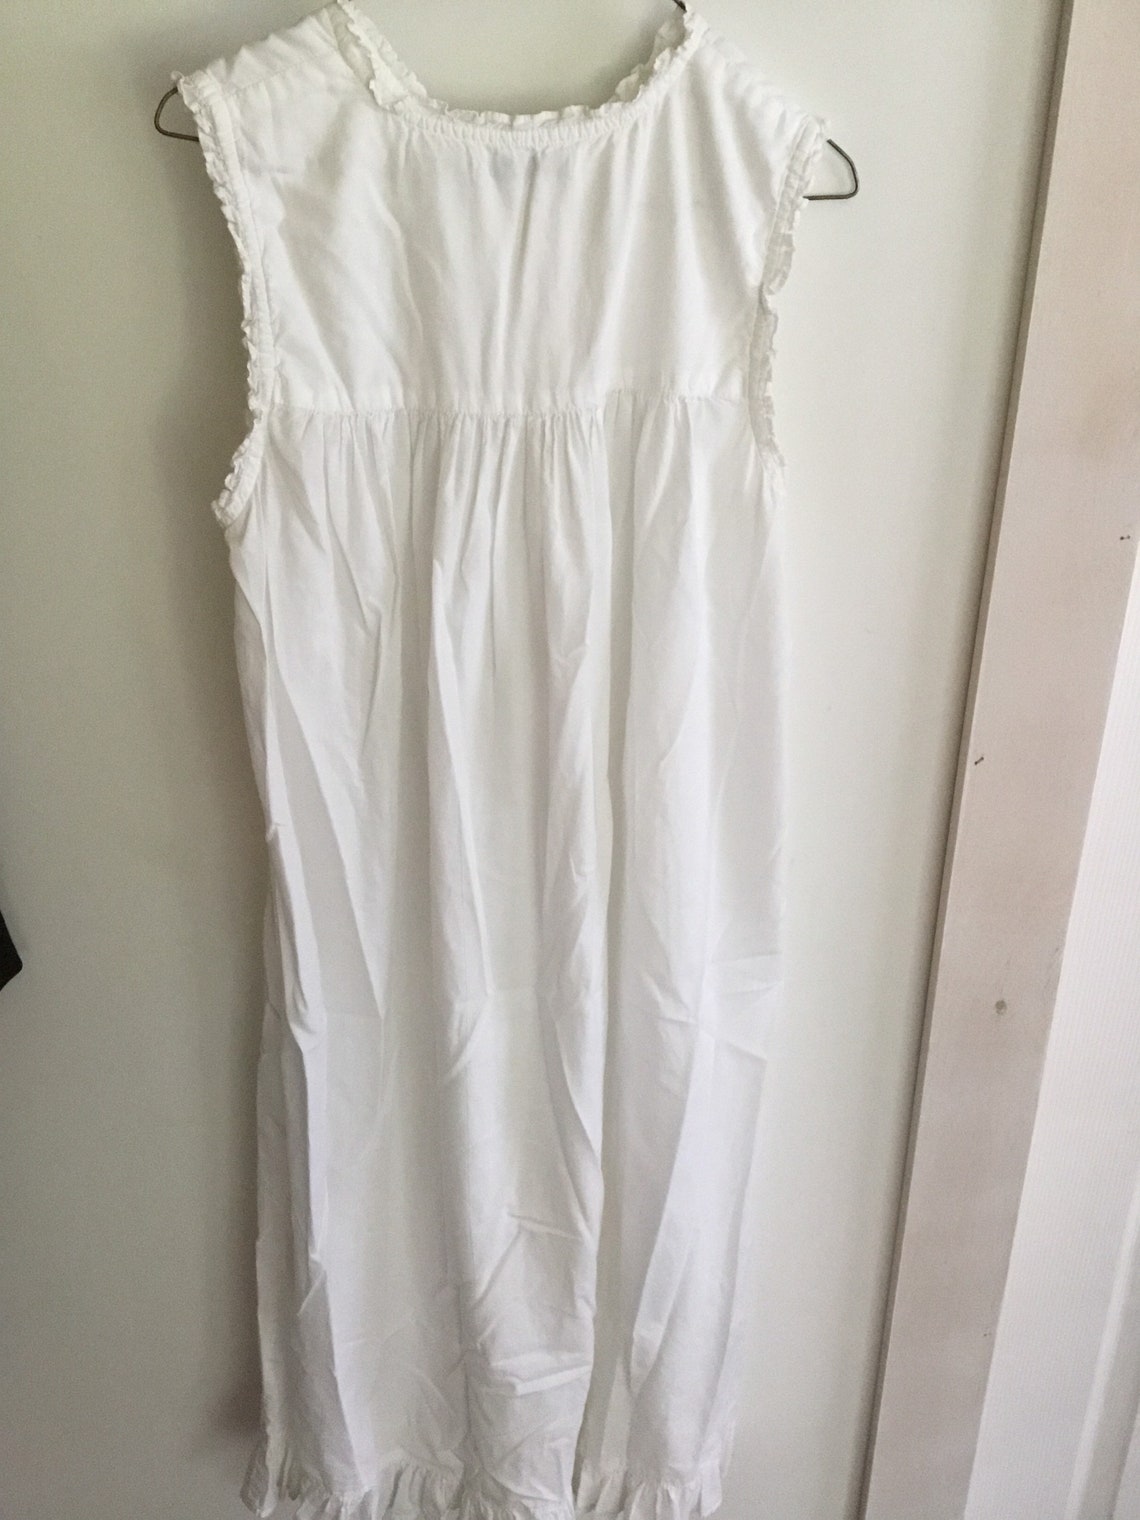 Vintage simple white cotton Laura Ashley nightgown nightie | Etsy